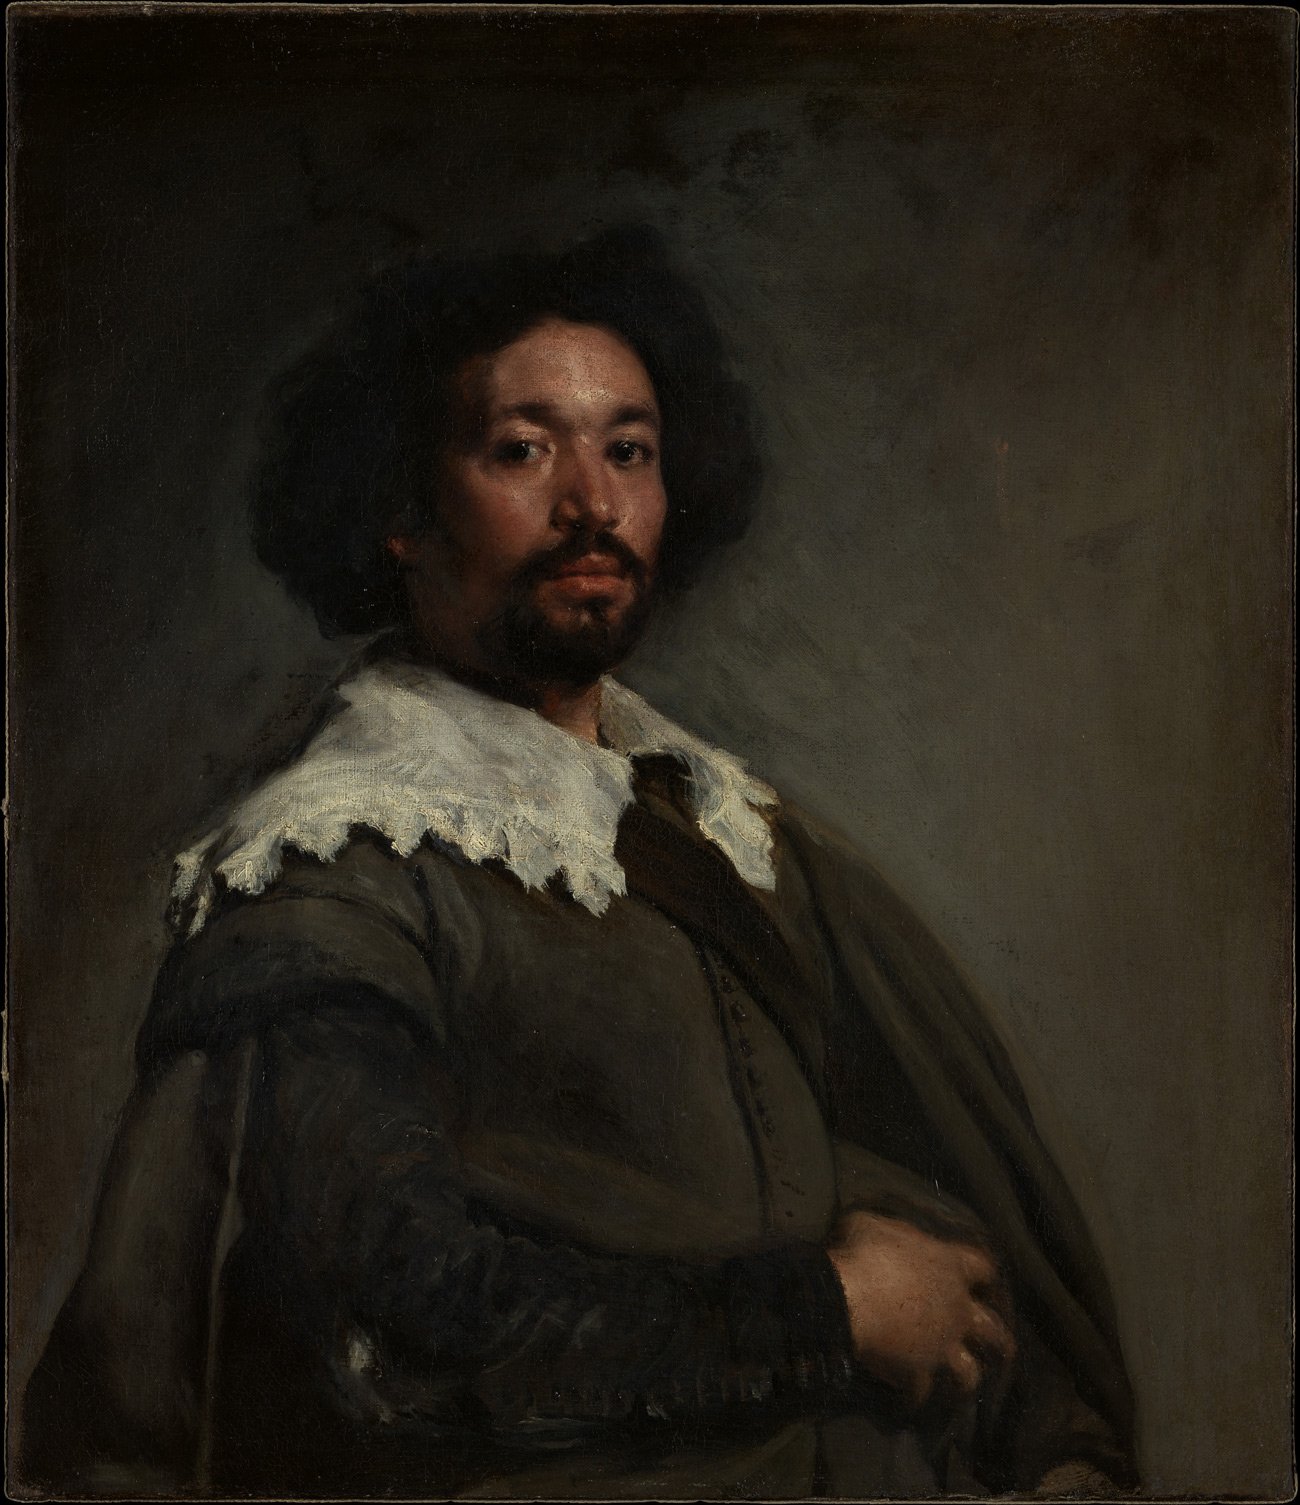  Diego Velázquez, Juan de Pareja (1650). Collection of The Metropolitan Museum of Art, New York. 